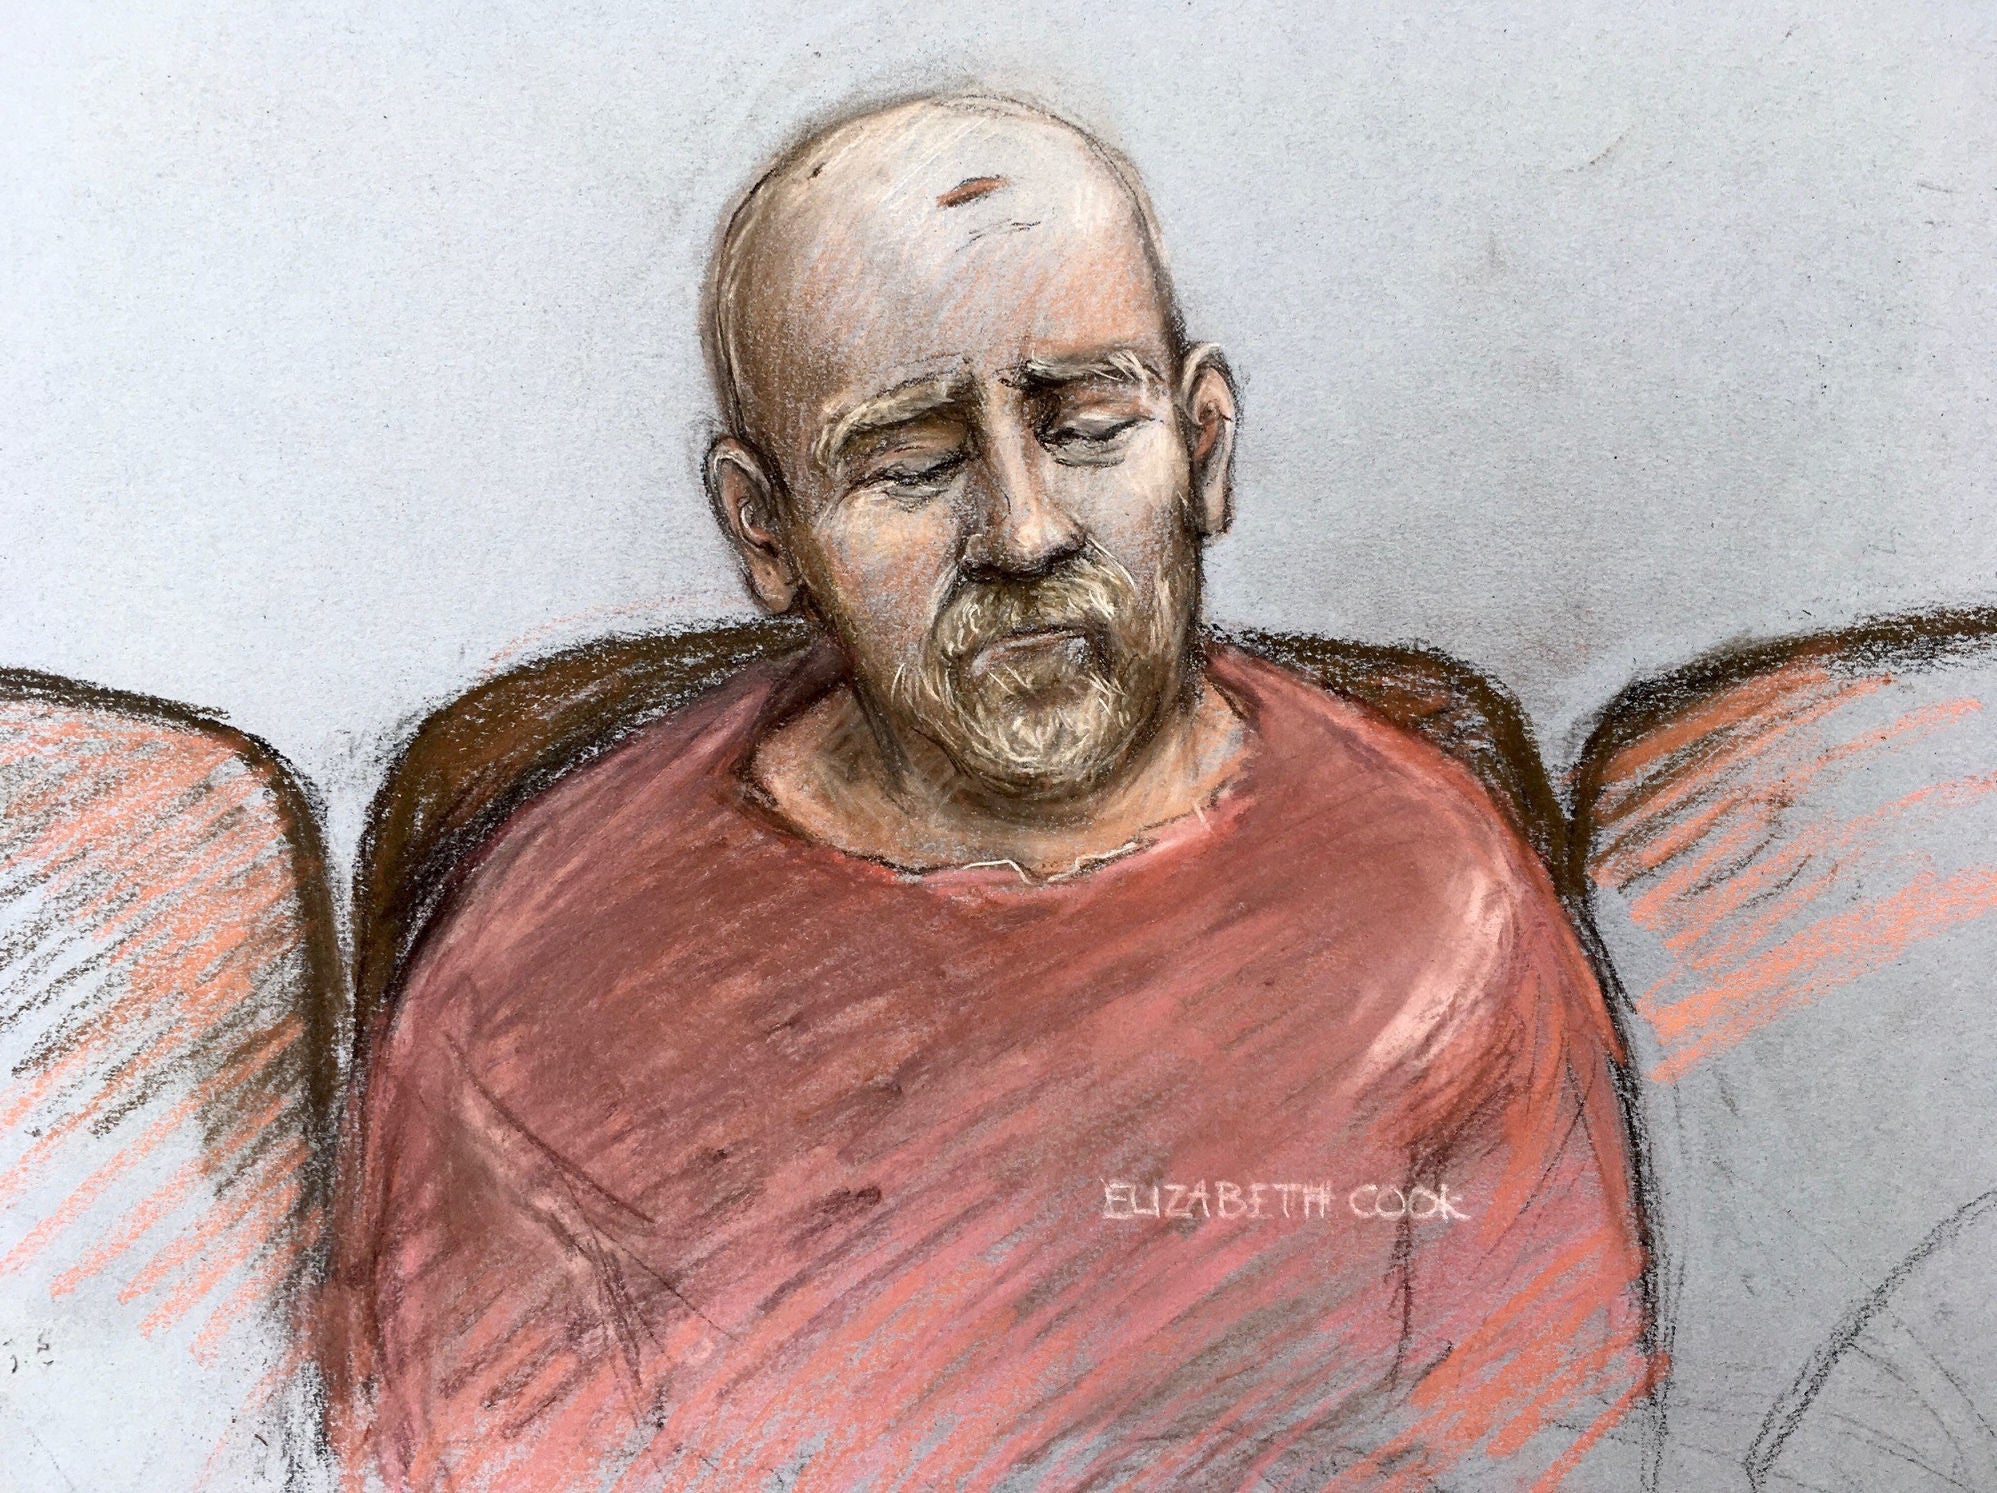 A court artist sketch Wayne Couzens pleading guilty to killing Sarah Everard